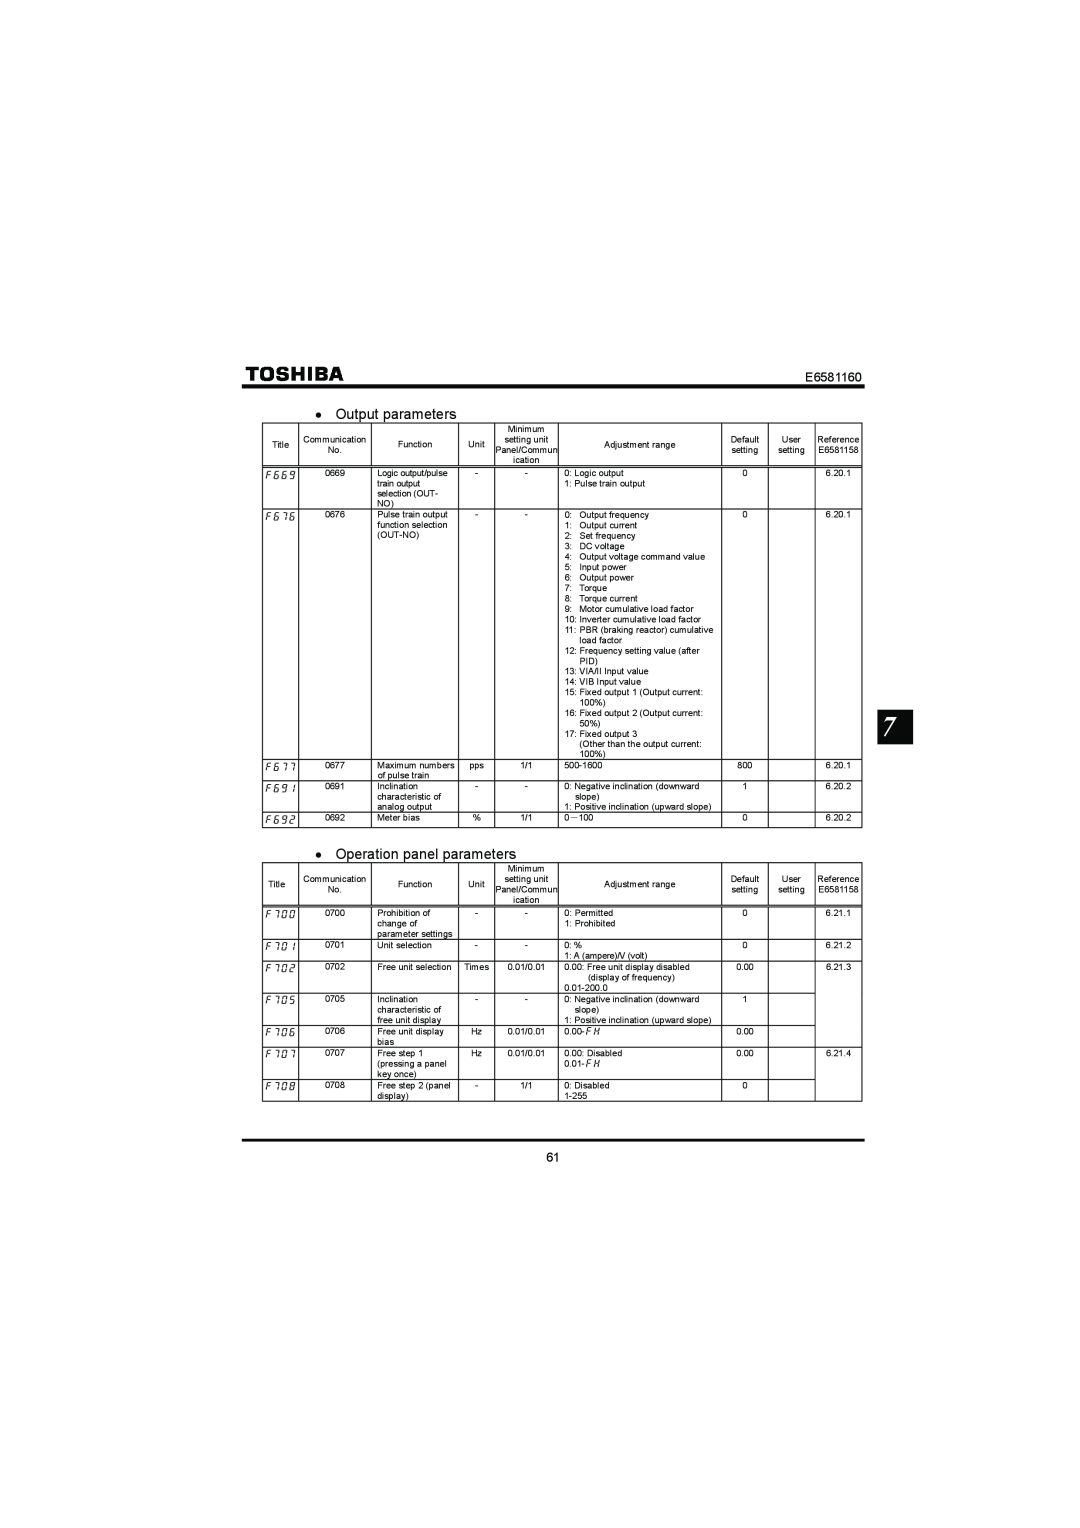 Toshiba VF-S11 manual Output parameters, Operation panel parameters, E6581160 